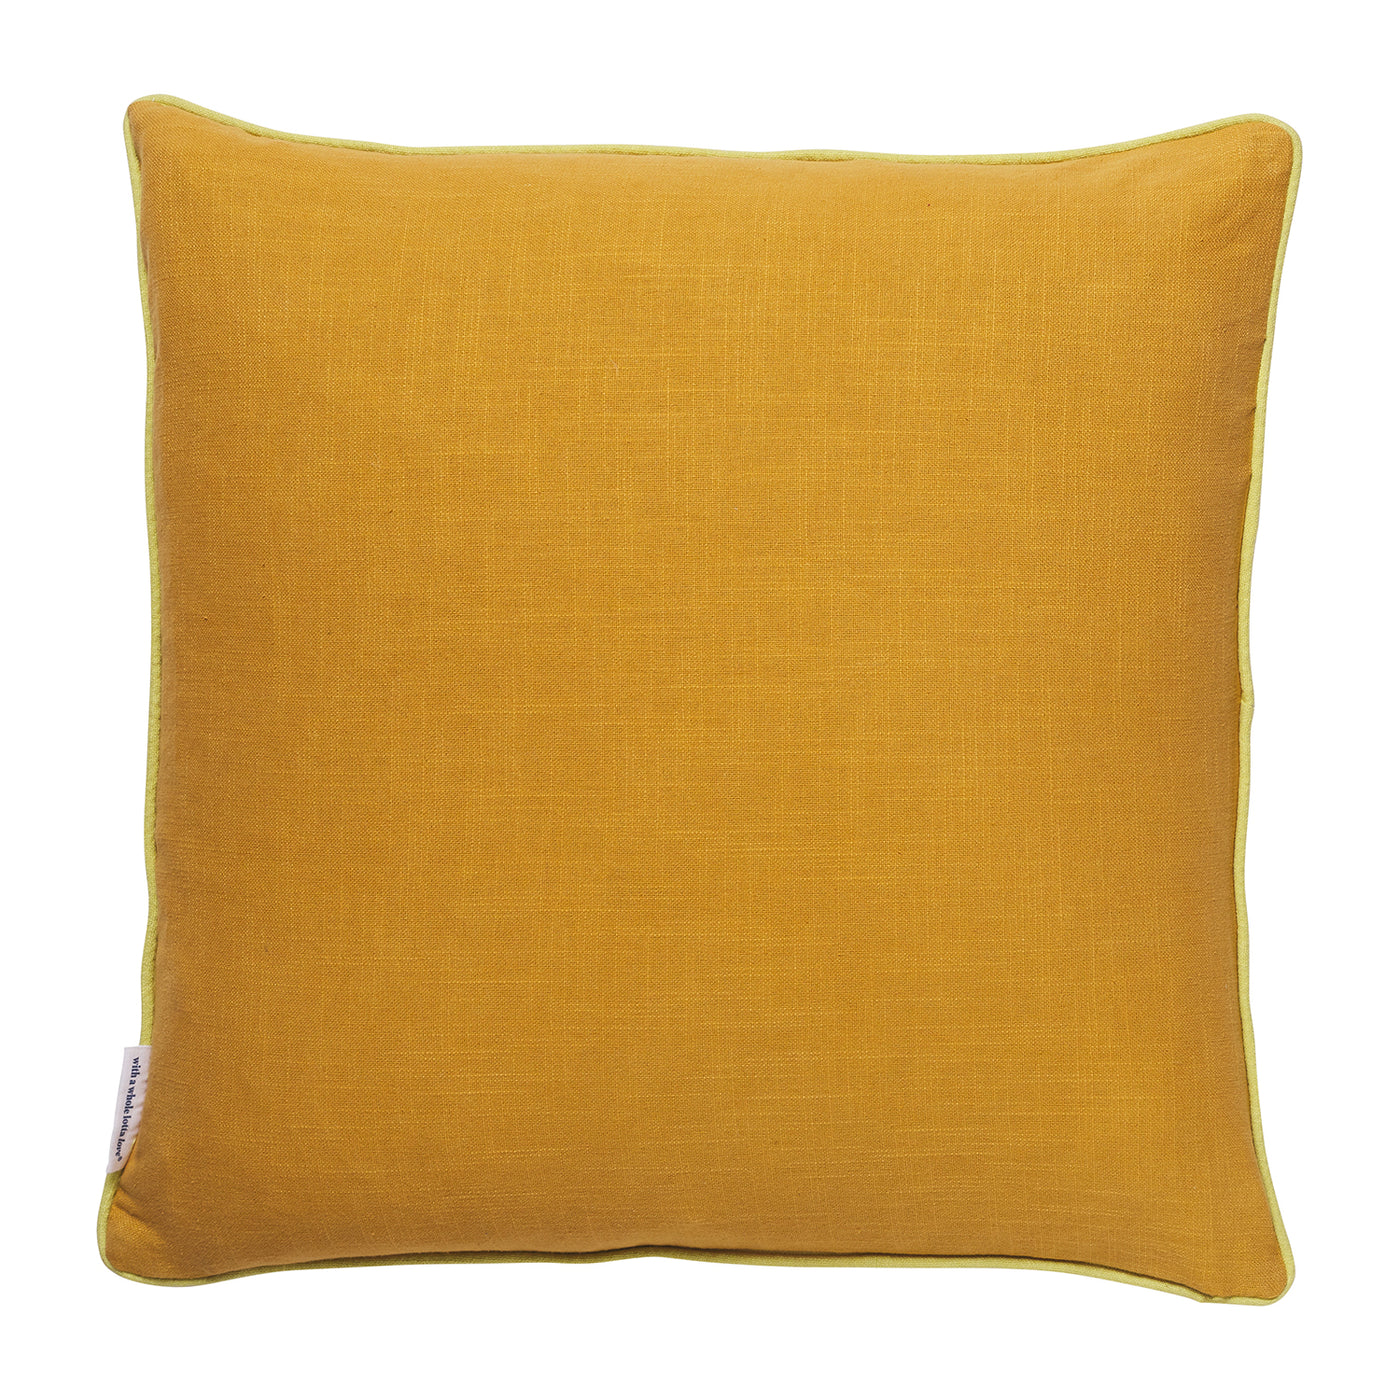 Otley Embroidered Cushion - Fudge Default Title